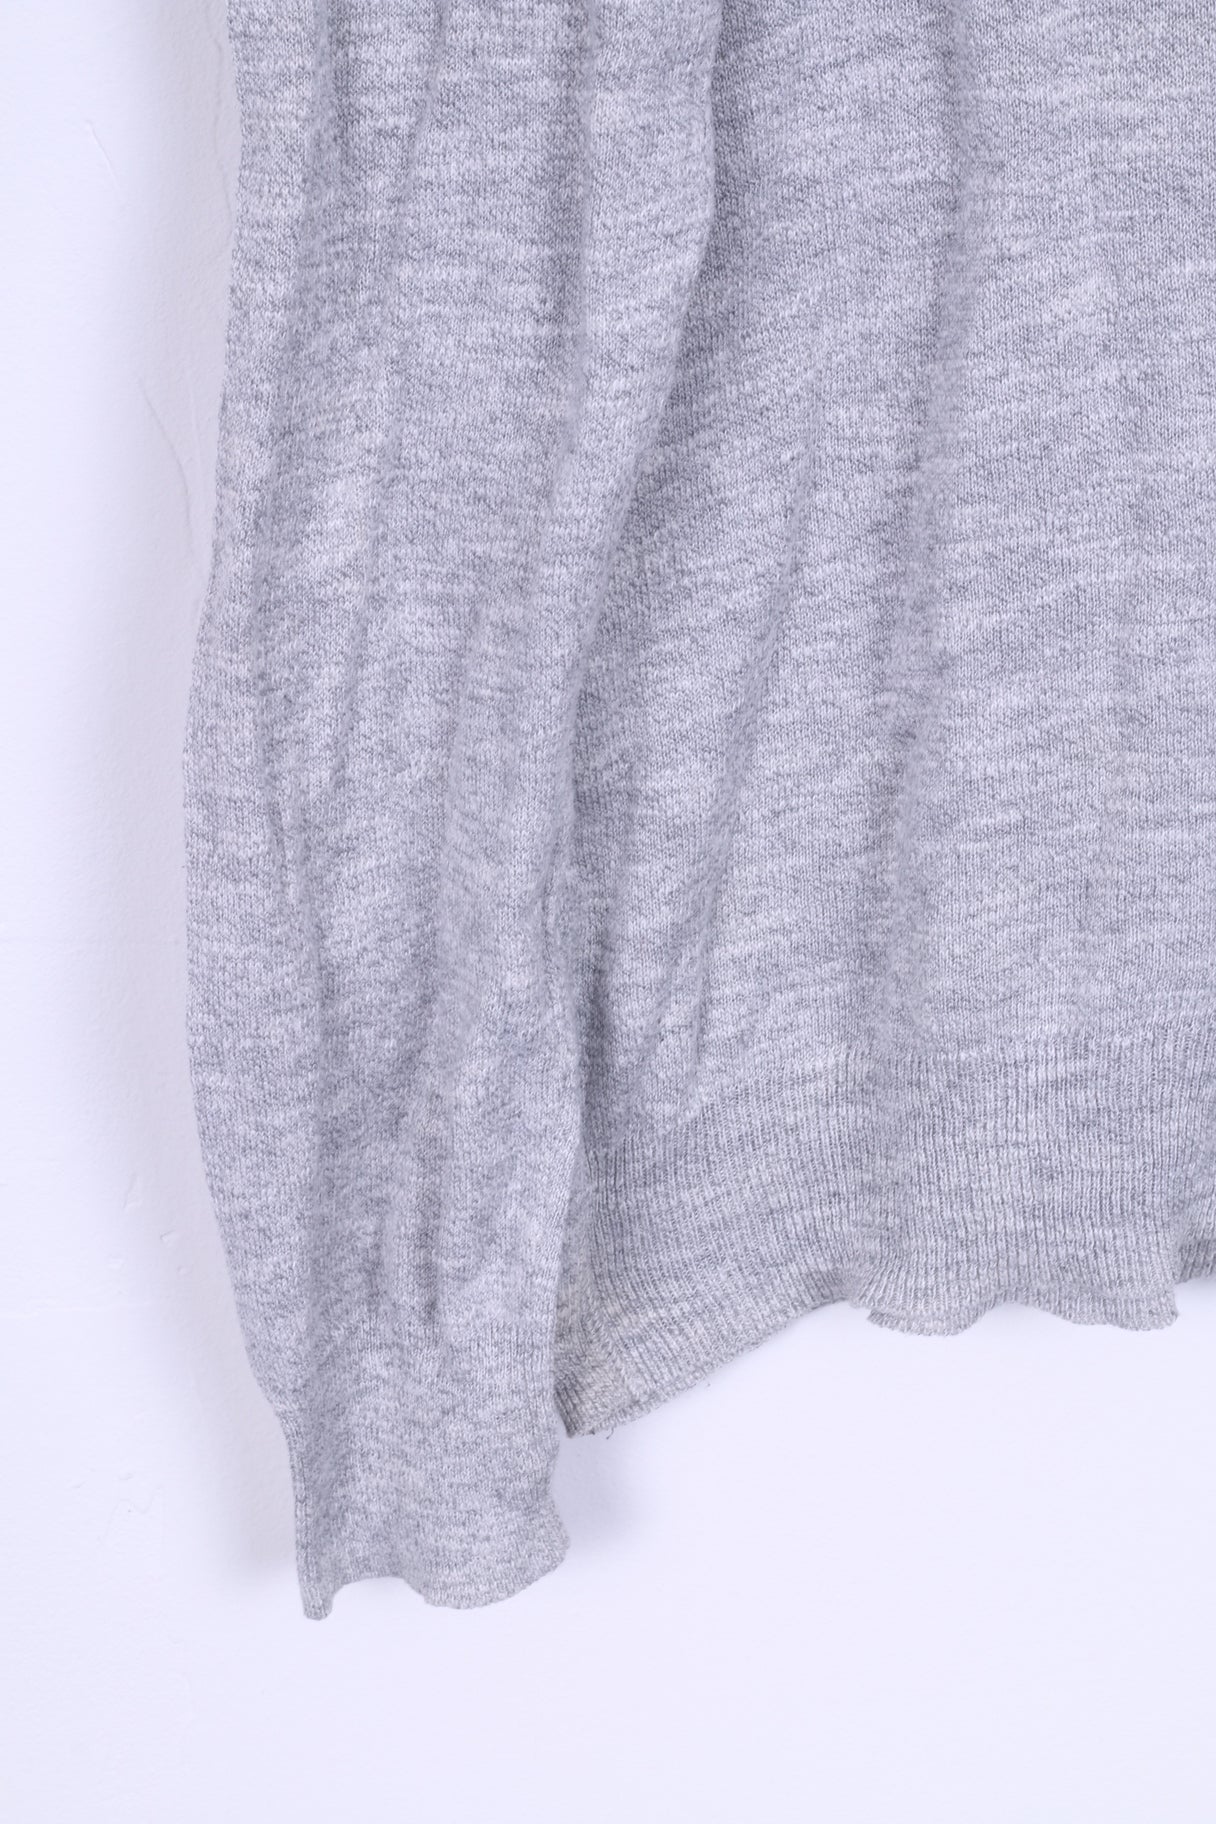 Gap Mens L (M) Jumper Light Grey Cotton Long Sleeved Sweater